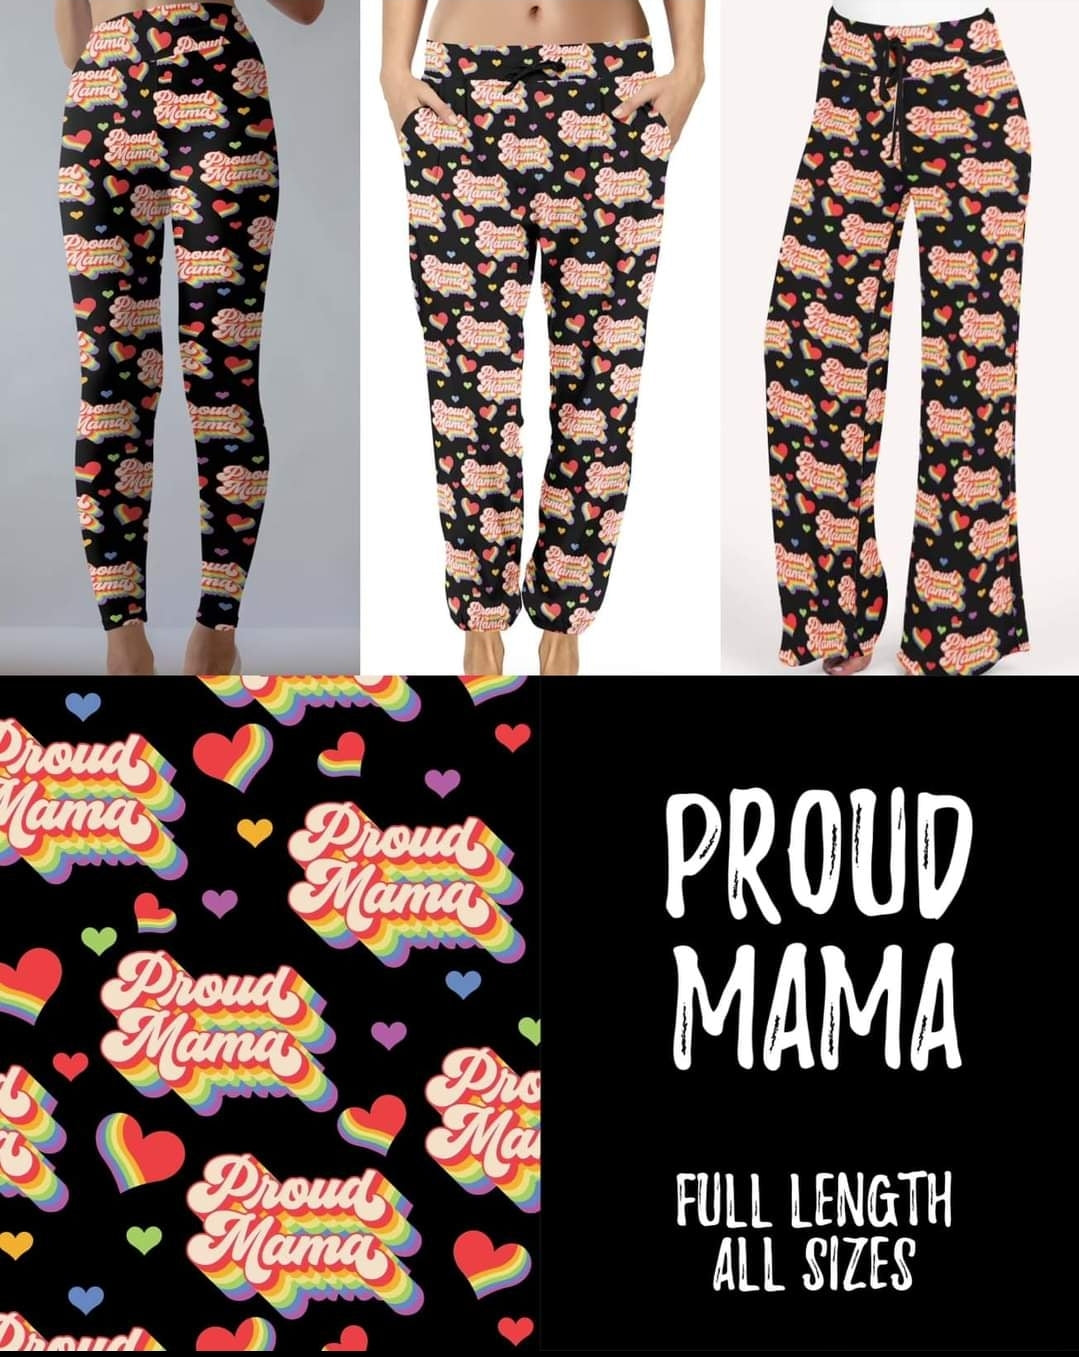 Proud Mama leggings, joggers and lounge pants